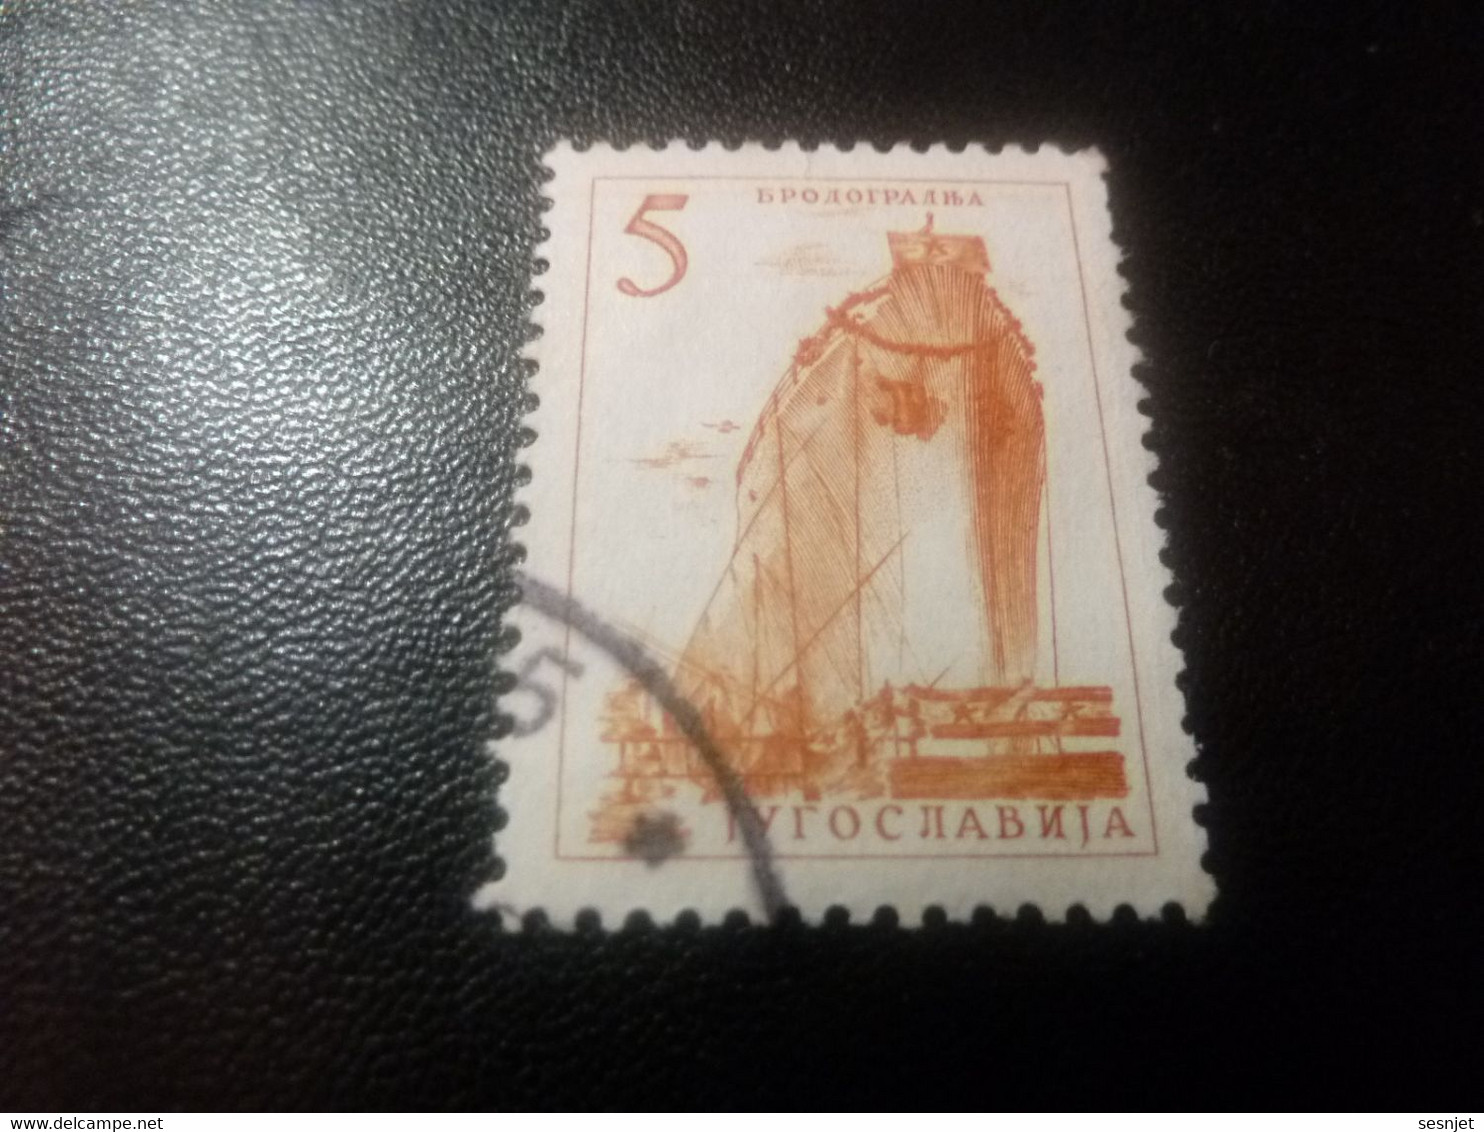 Jugoslavija -Bpoao1pa - Val 8 Surcharge 5 - Orange - Oblitéré - - Used Stamps